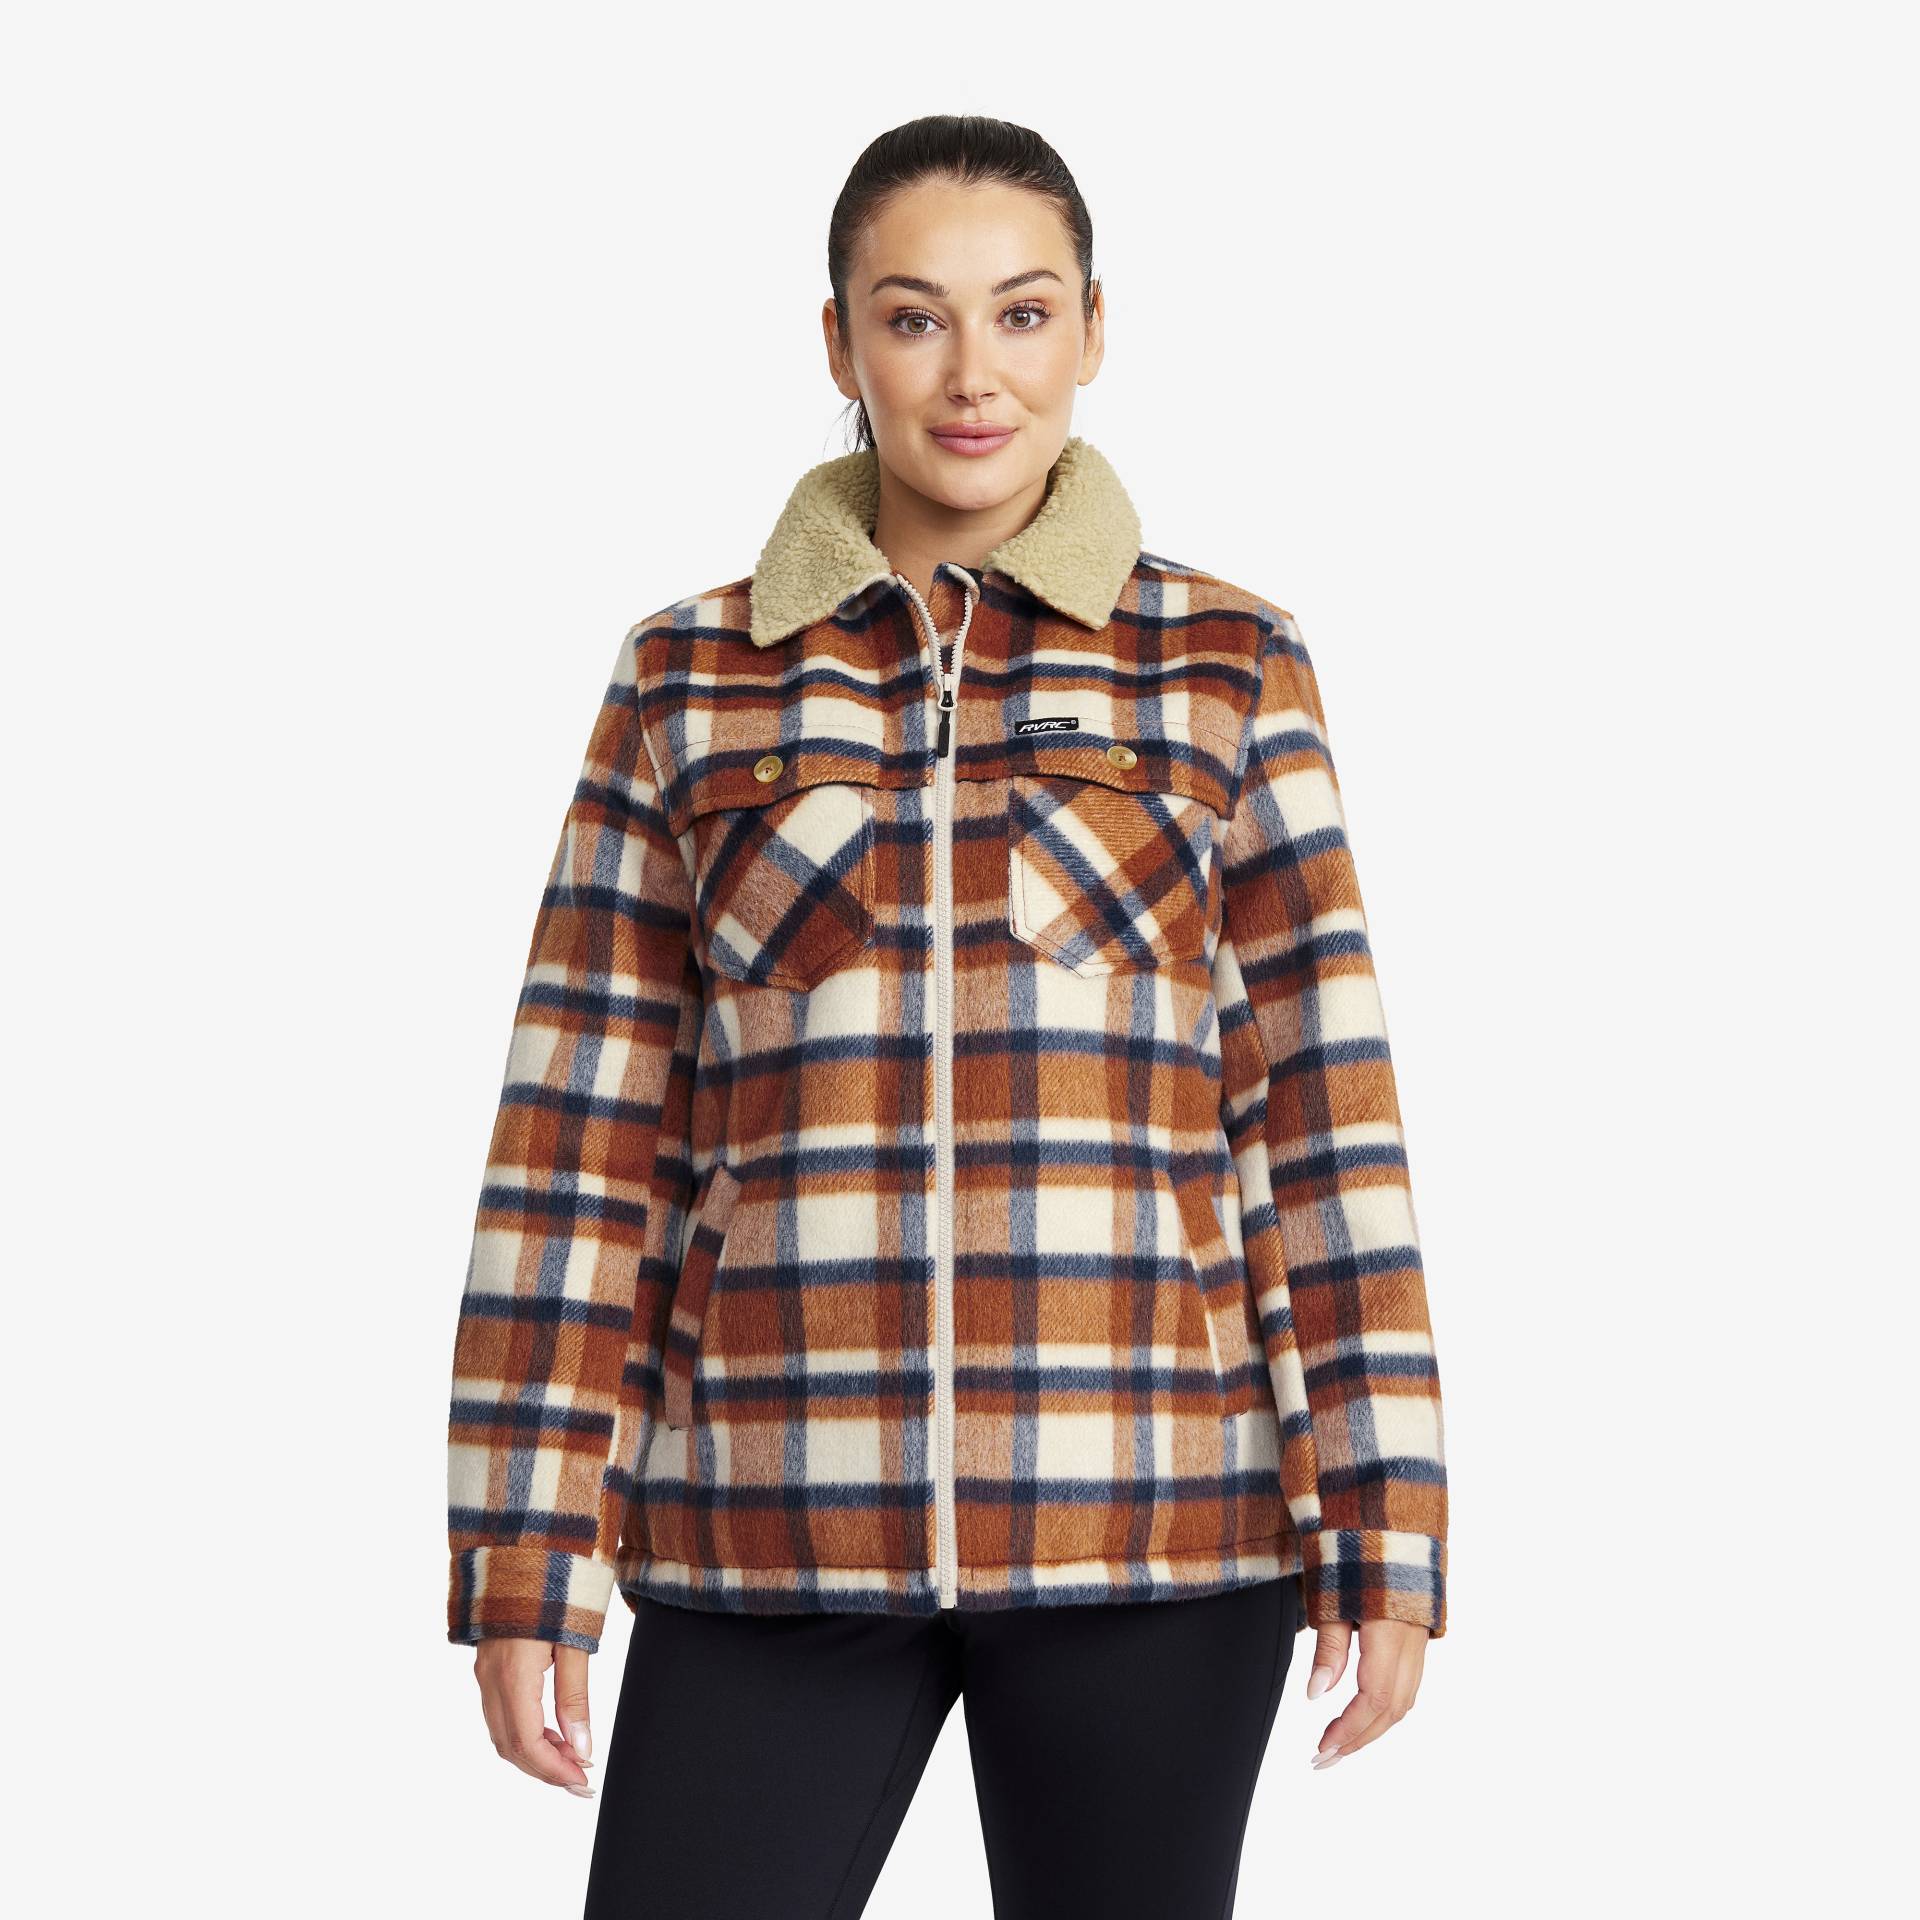 Lumber Jacket Damen Rusty Orange/Oatmeal, Größe:S - von RevolutionRace